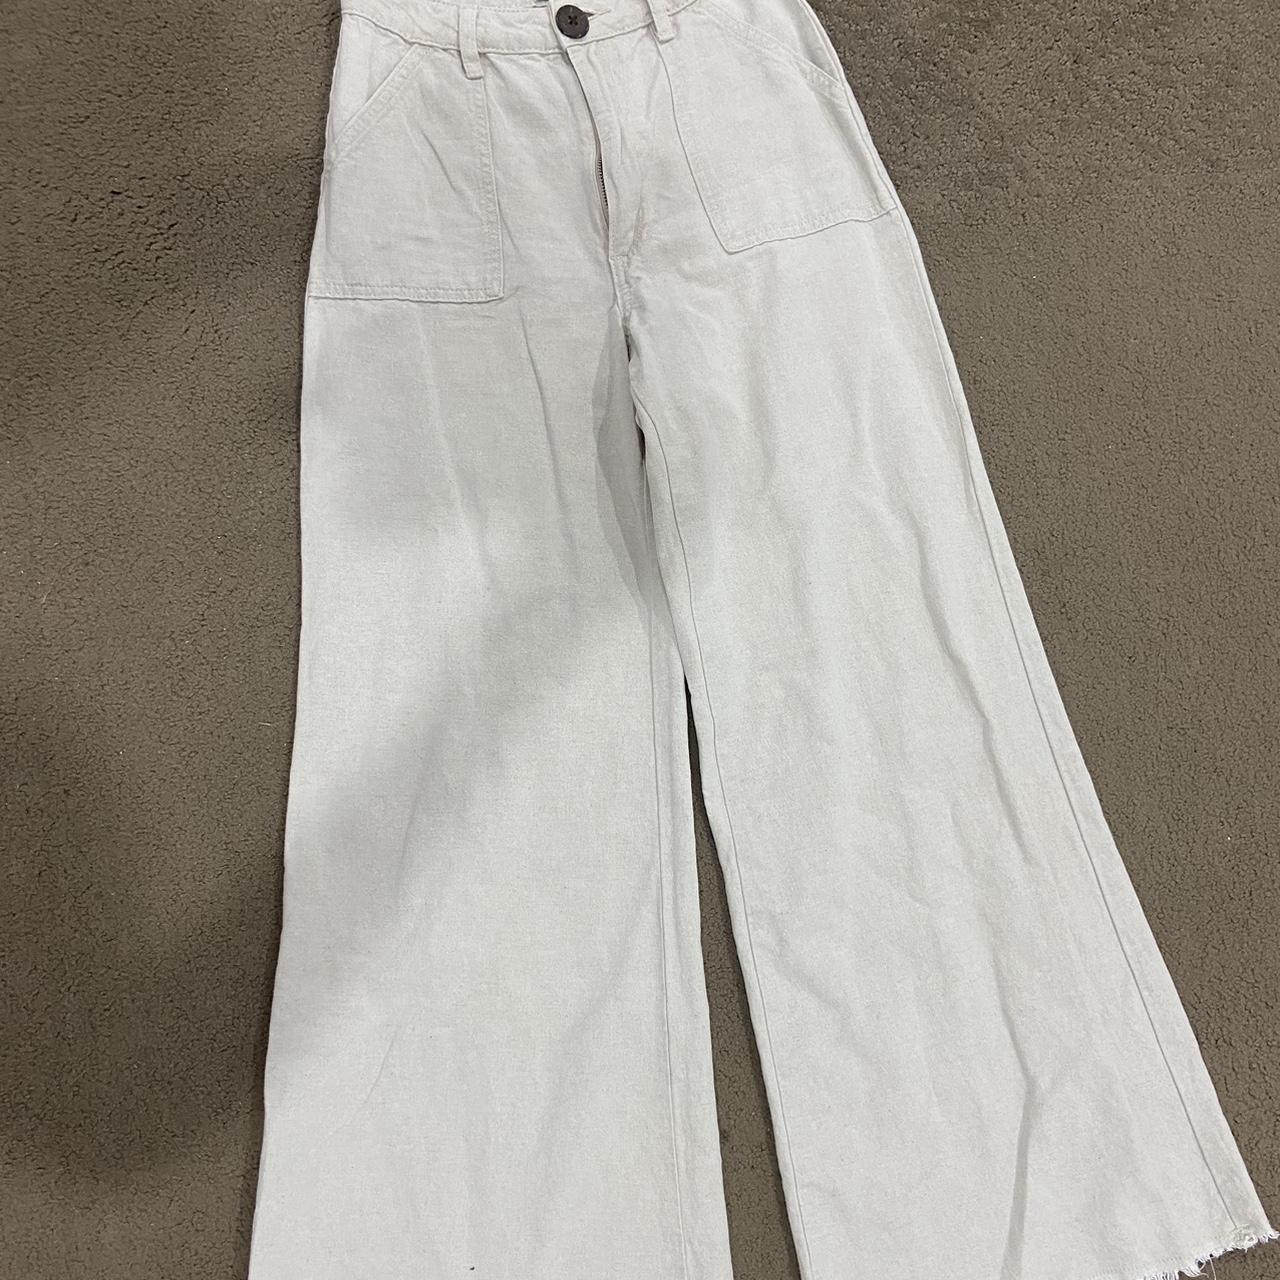 Ghanda Linen Flare Pants $40 originally paid... - Depop